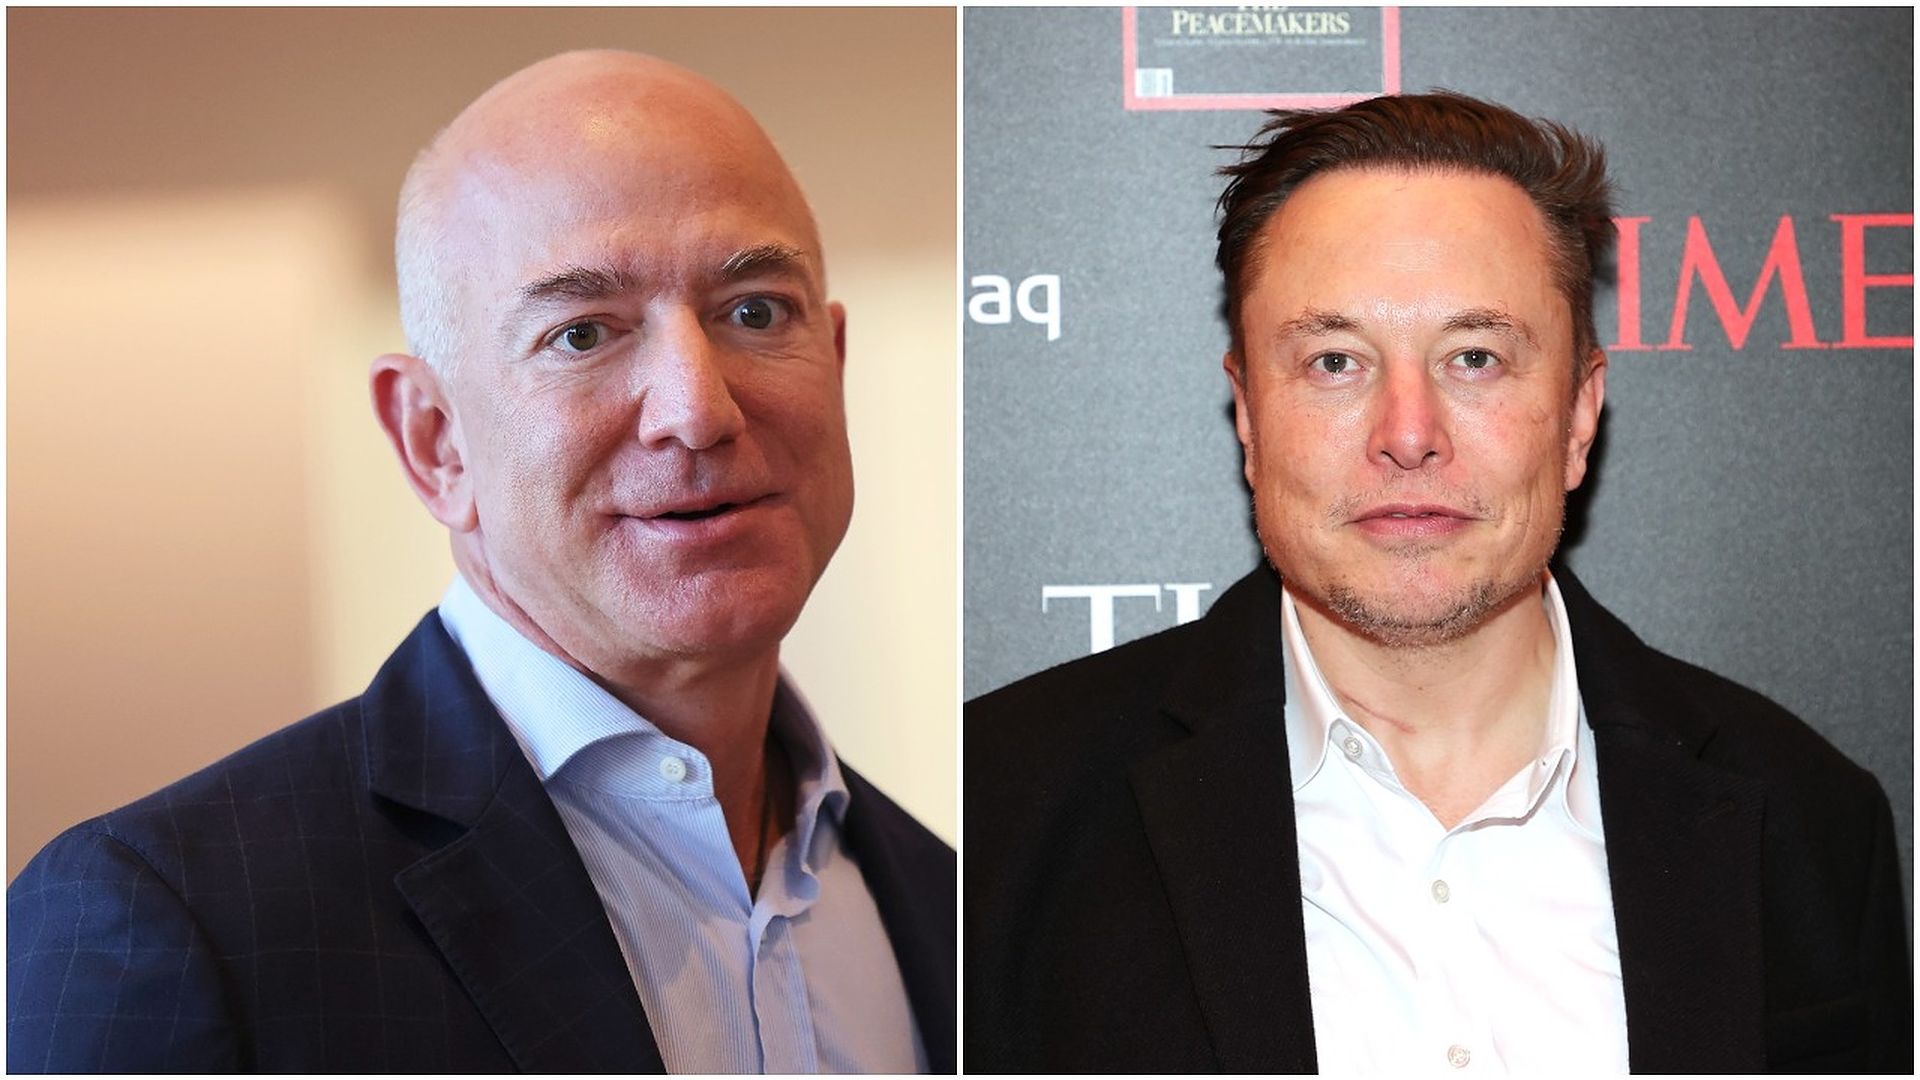 Combination images of billionaires Jeff Bezos and Elon Musk.